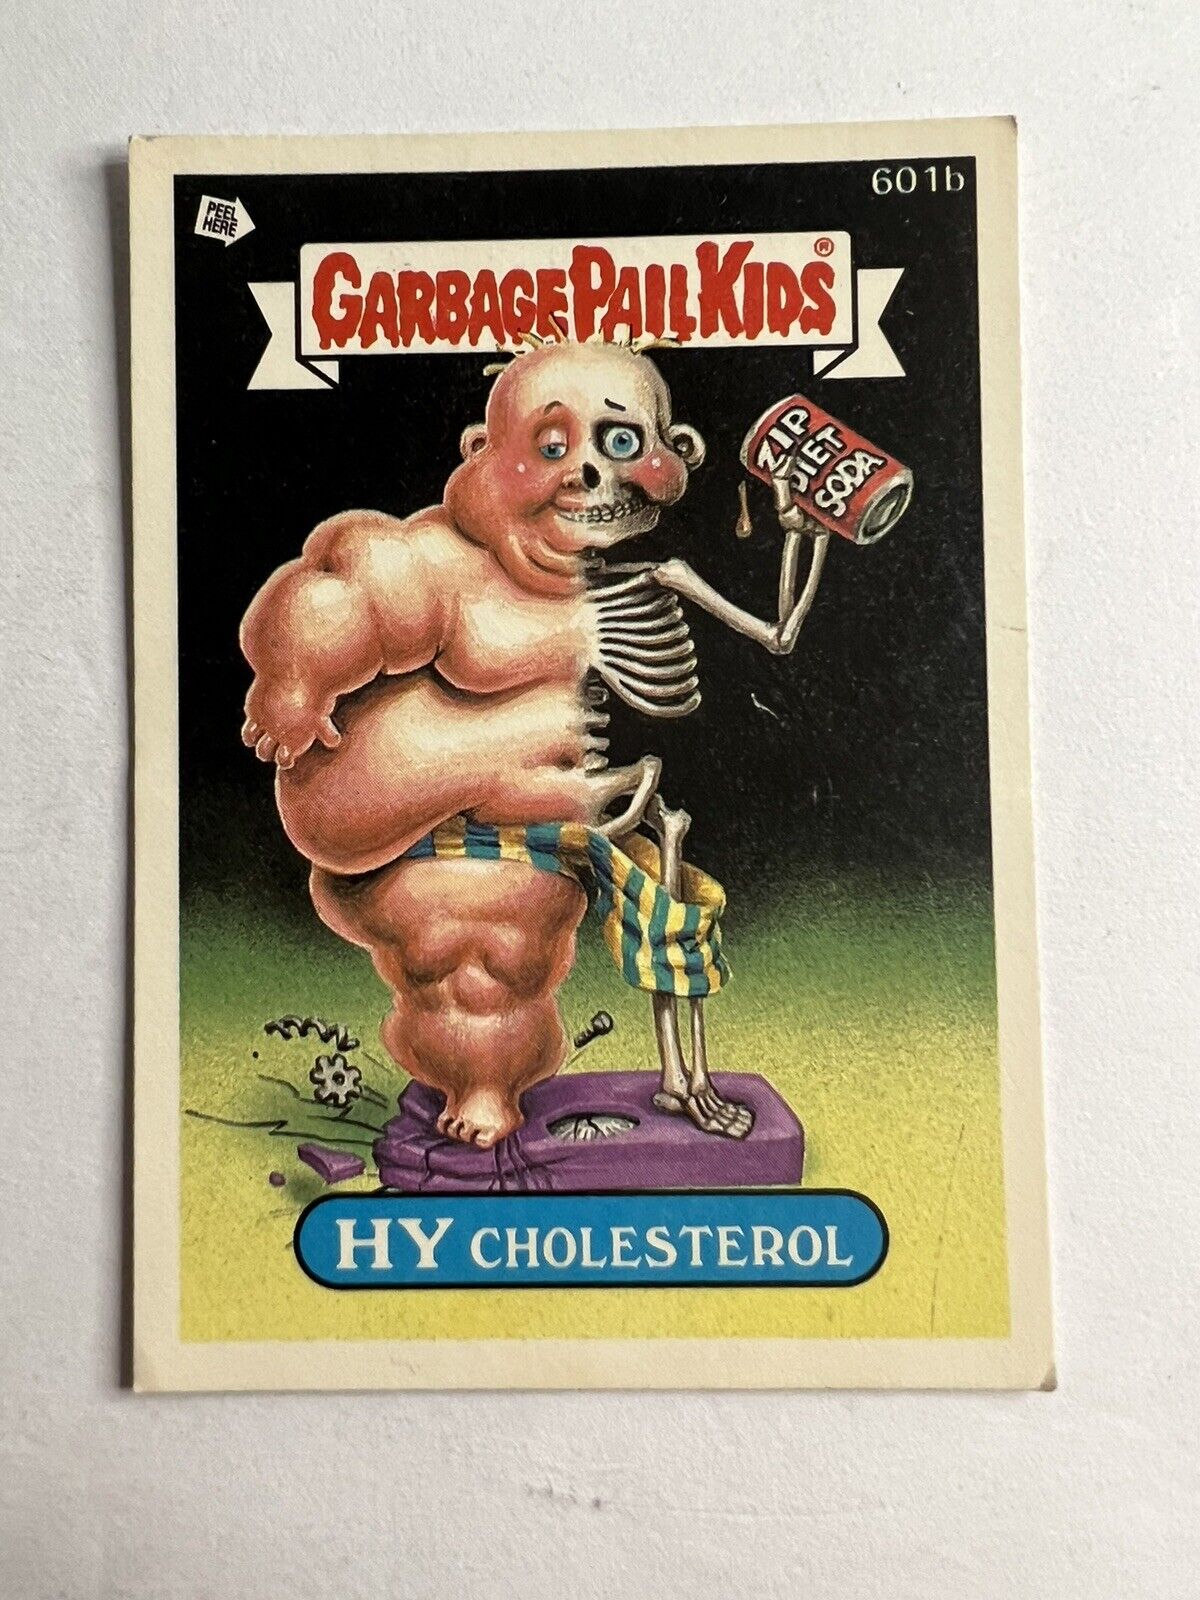 Vintage Garbage Pail Kids Series 15 Sticker #601b HY CHOLESTEROL - Topps 1988